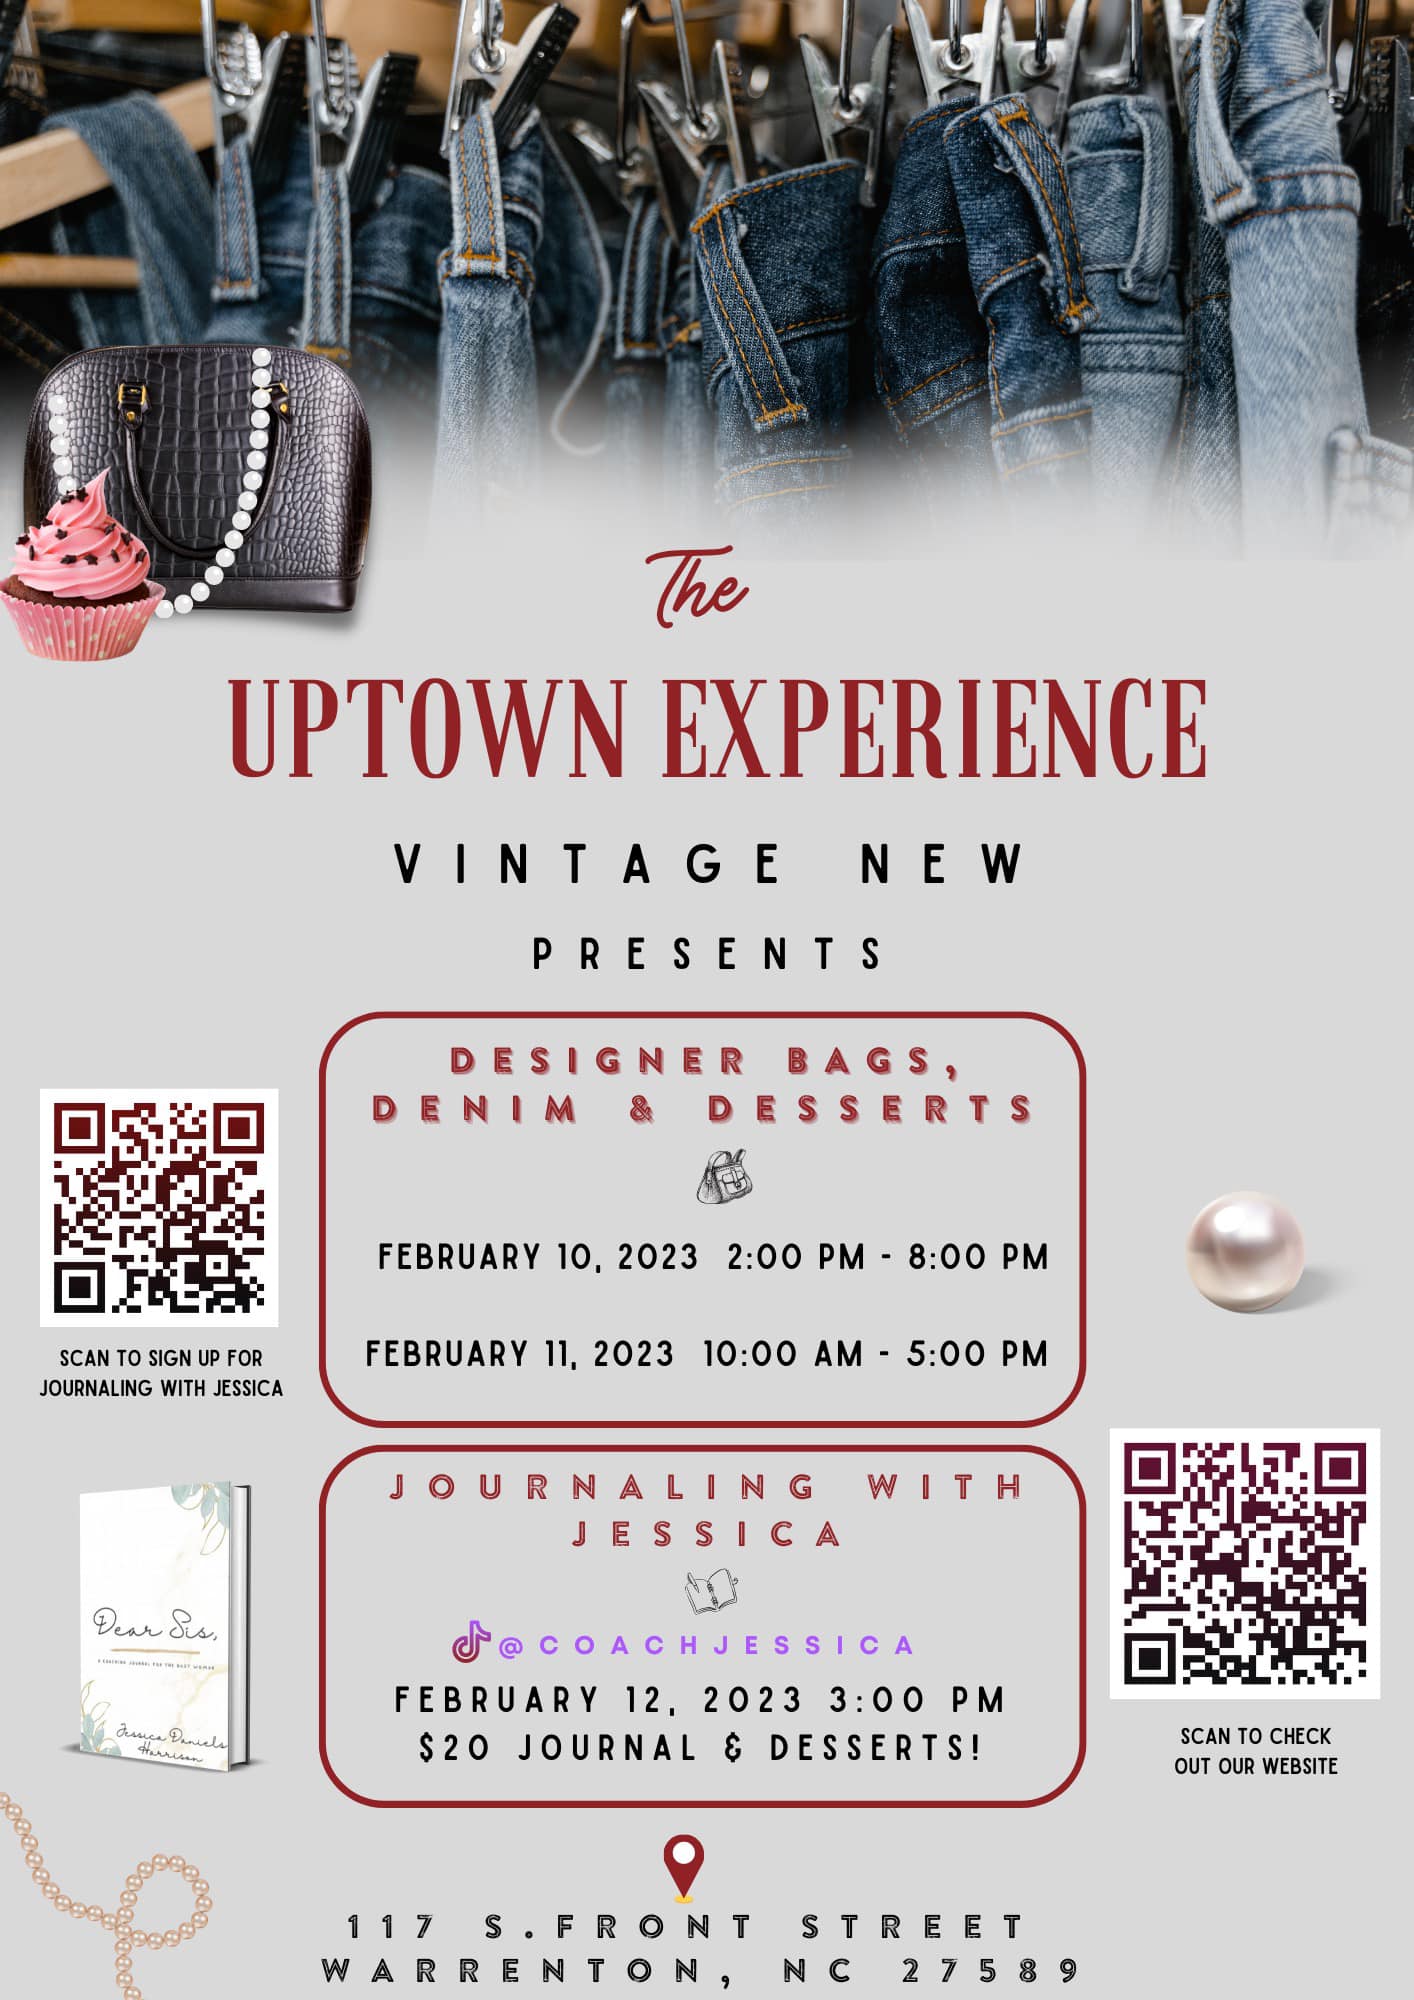 uptown experience vintage new designer bags denim desserts warrenton nc february 10 11 2023